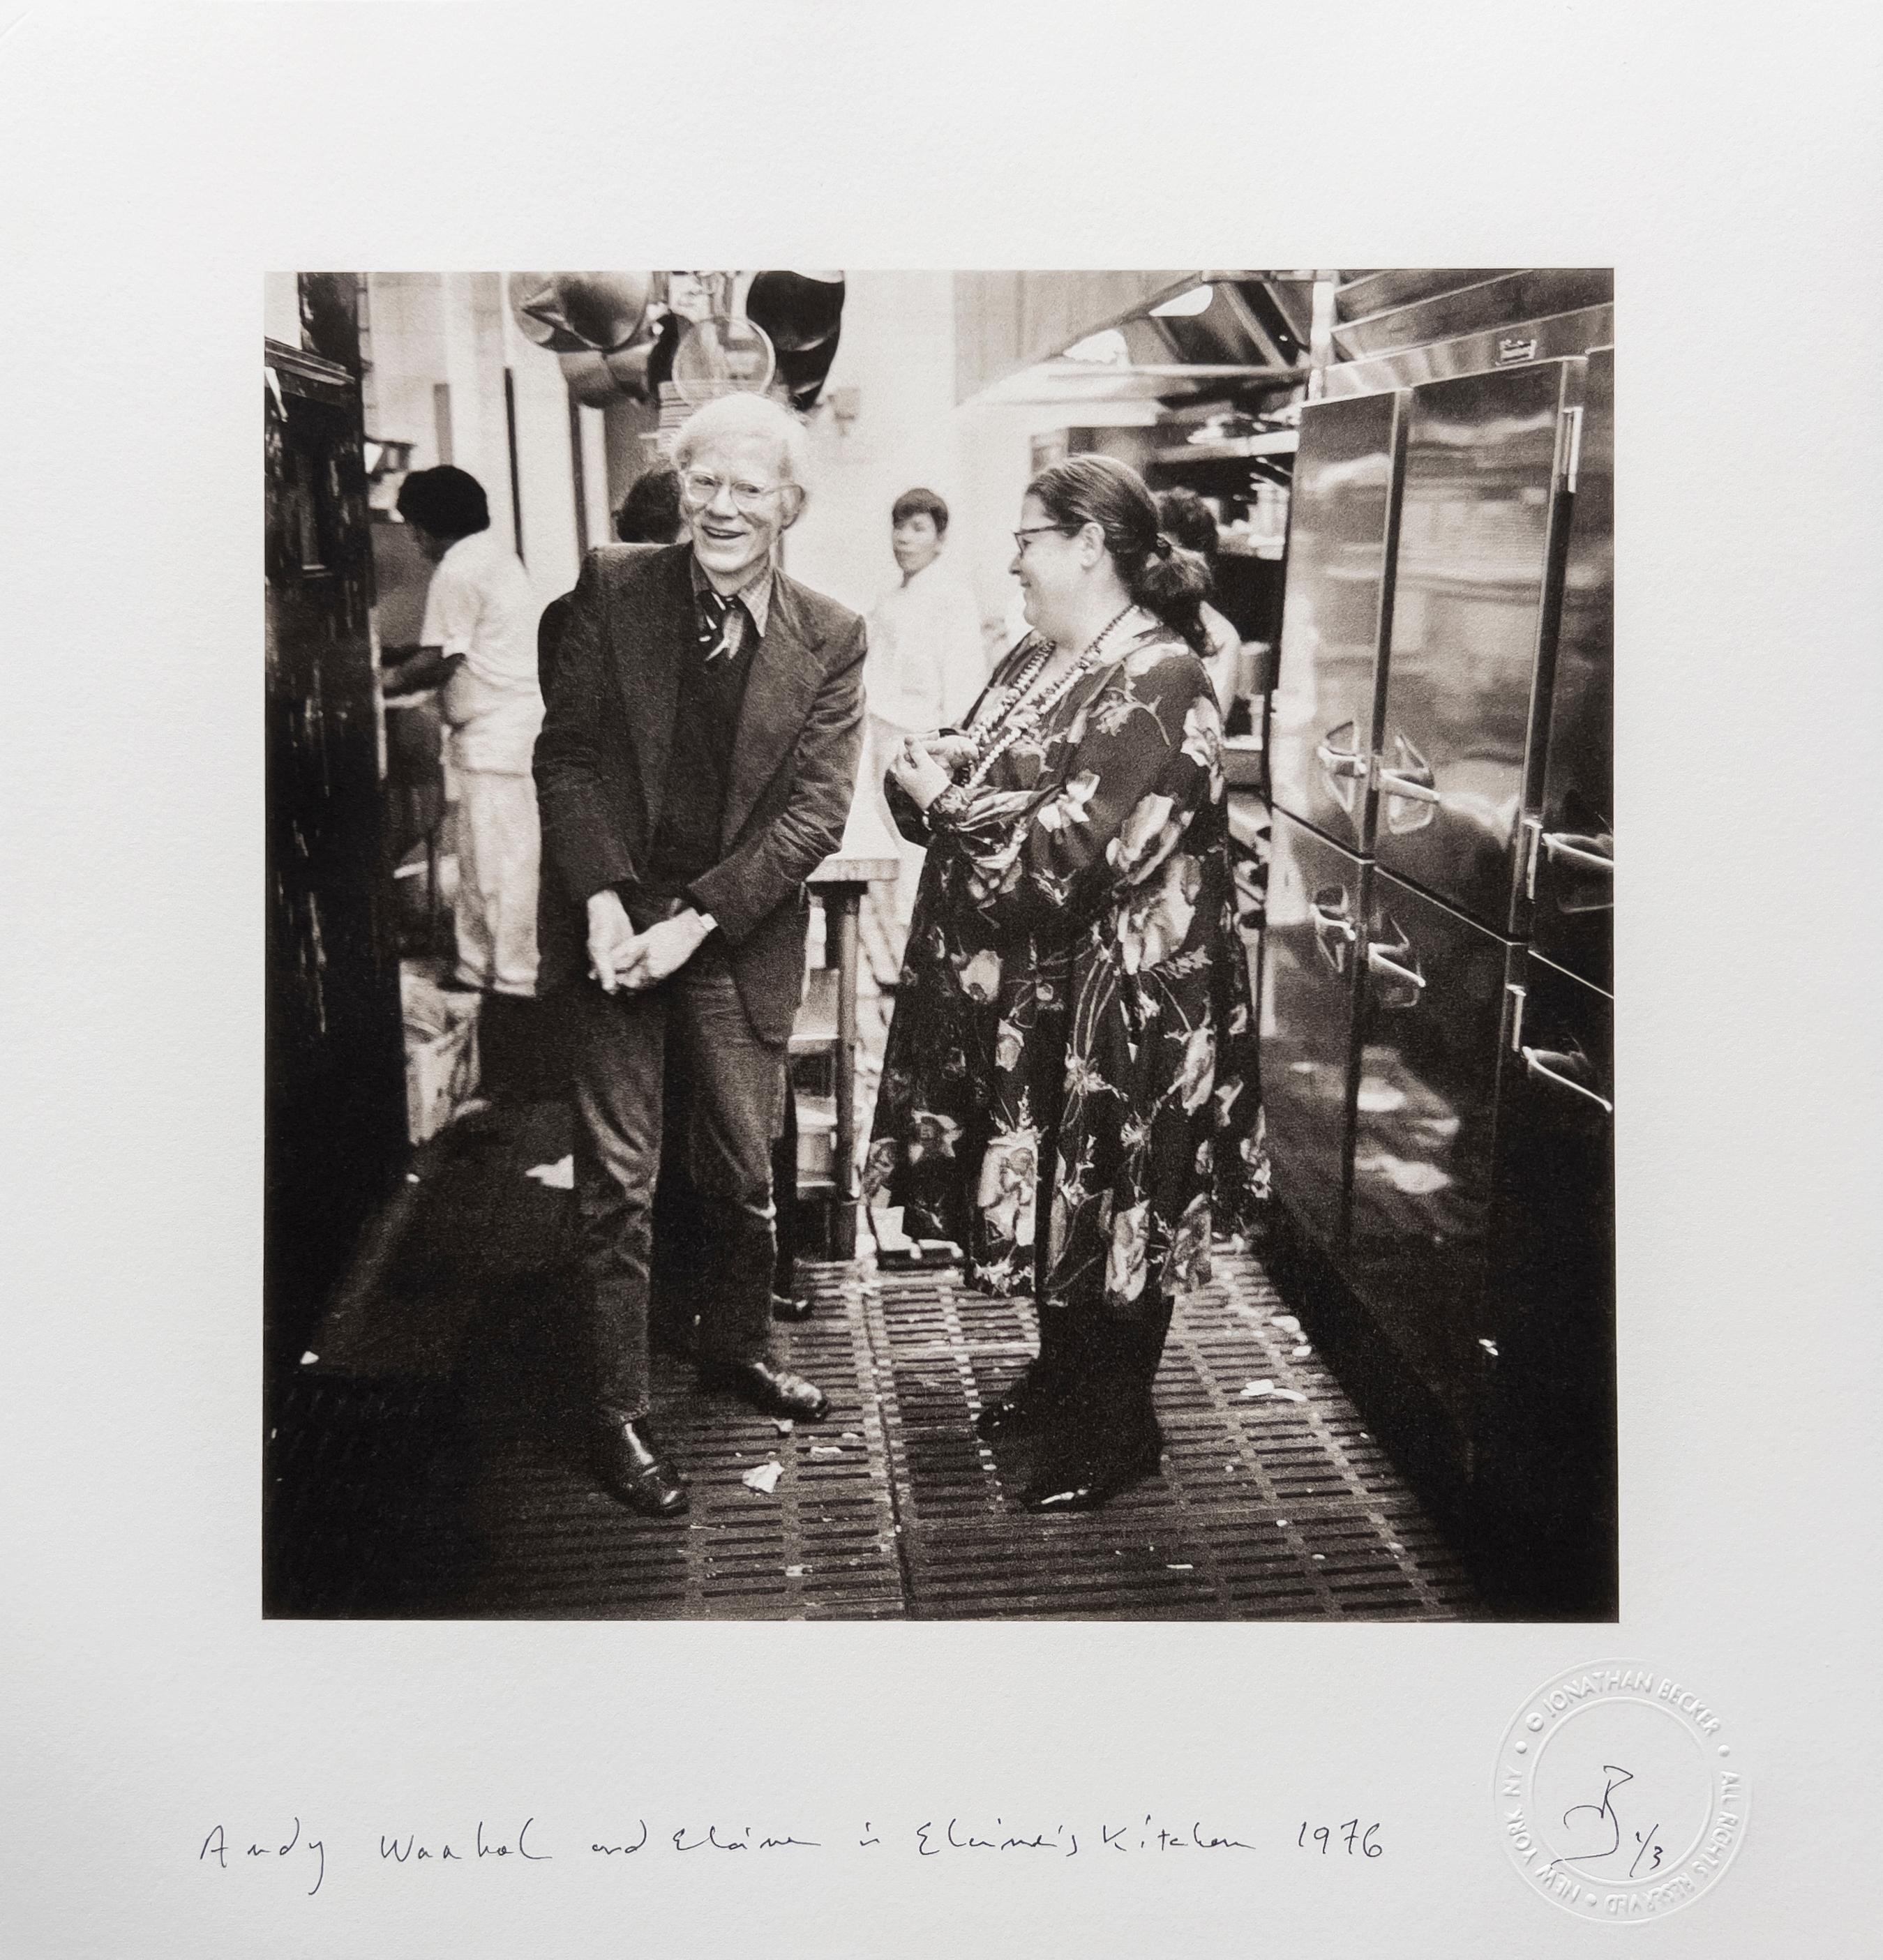 Jonathan Becker Portrait Photograph - Elaine's Kitchen - Andy Warhol and Elaine,  New York, 1976